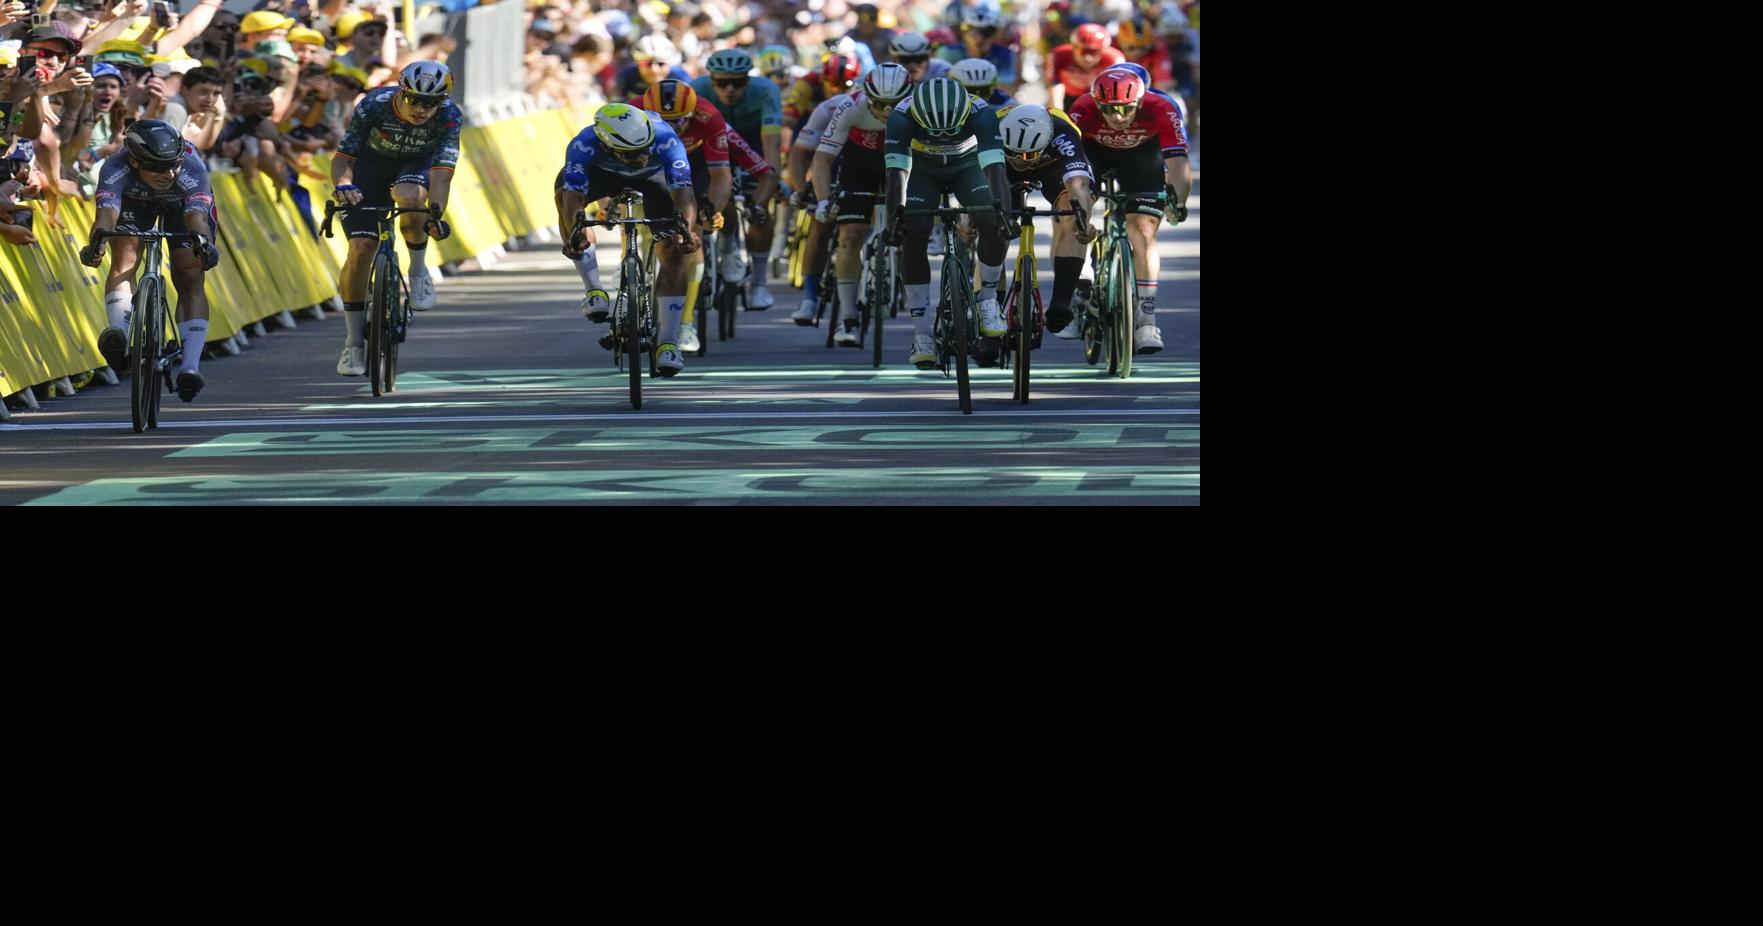 Nederlandse sprinter Groenewegen wint Tour de France-etappe 6 in fotofinish |  nationale Sport